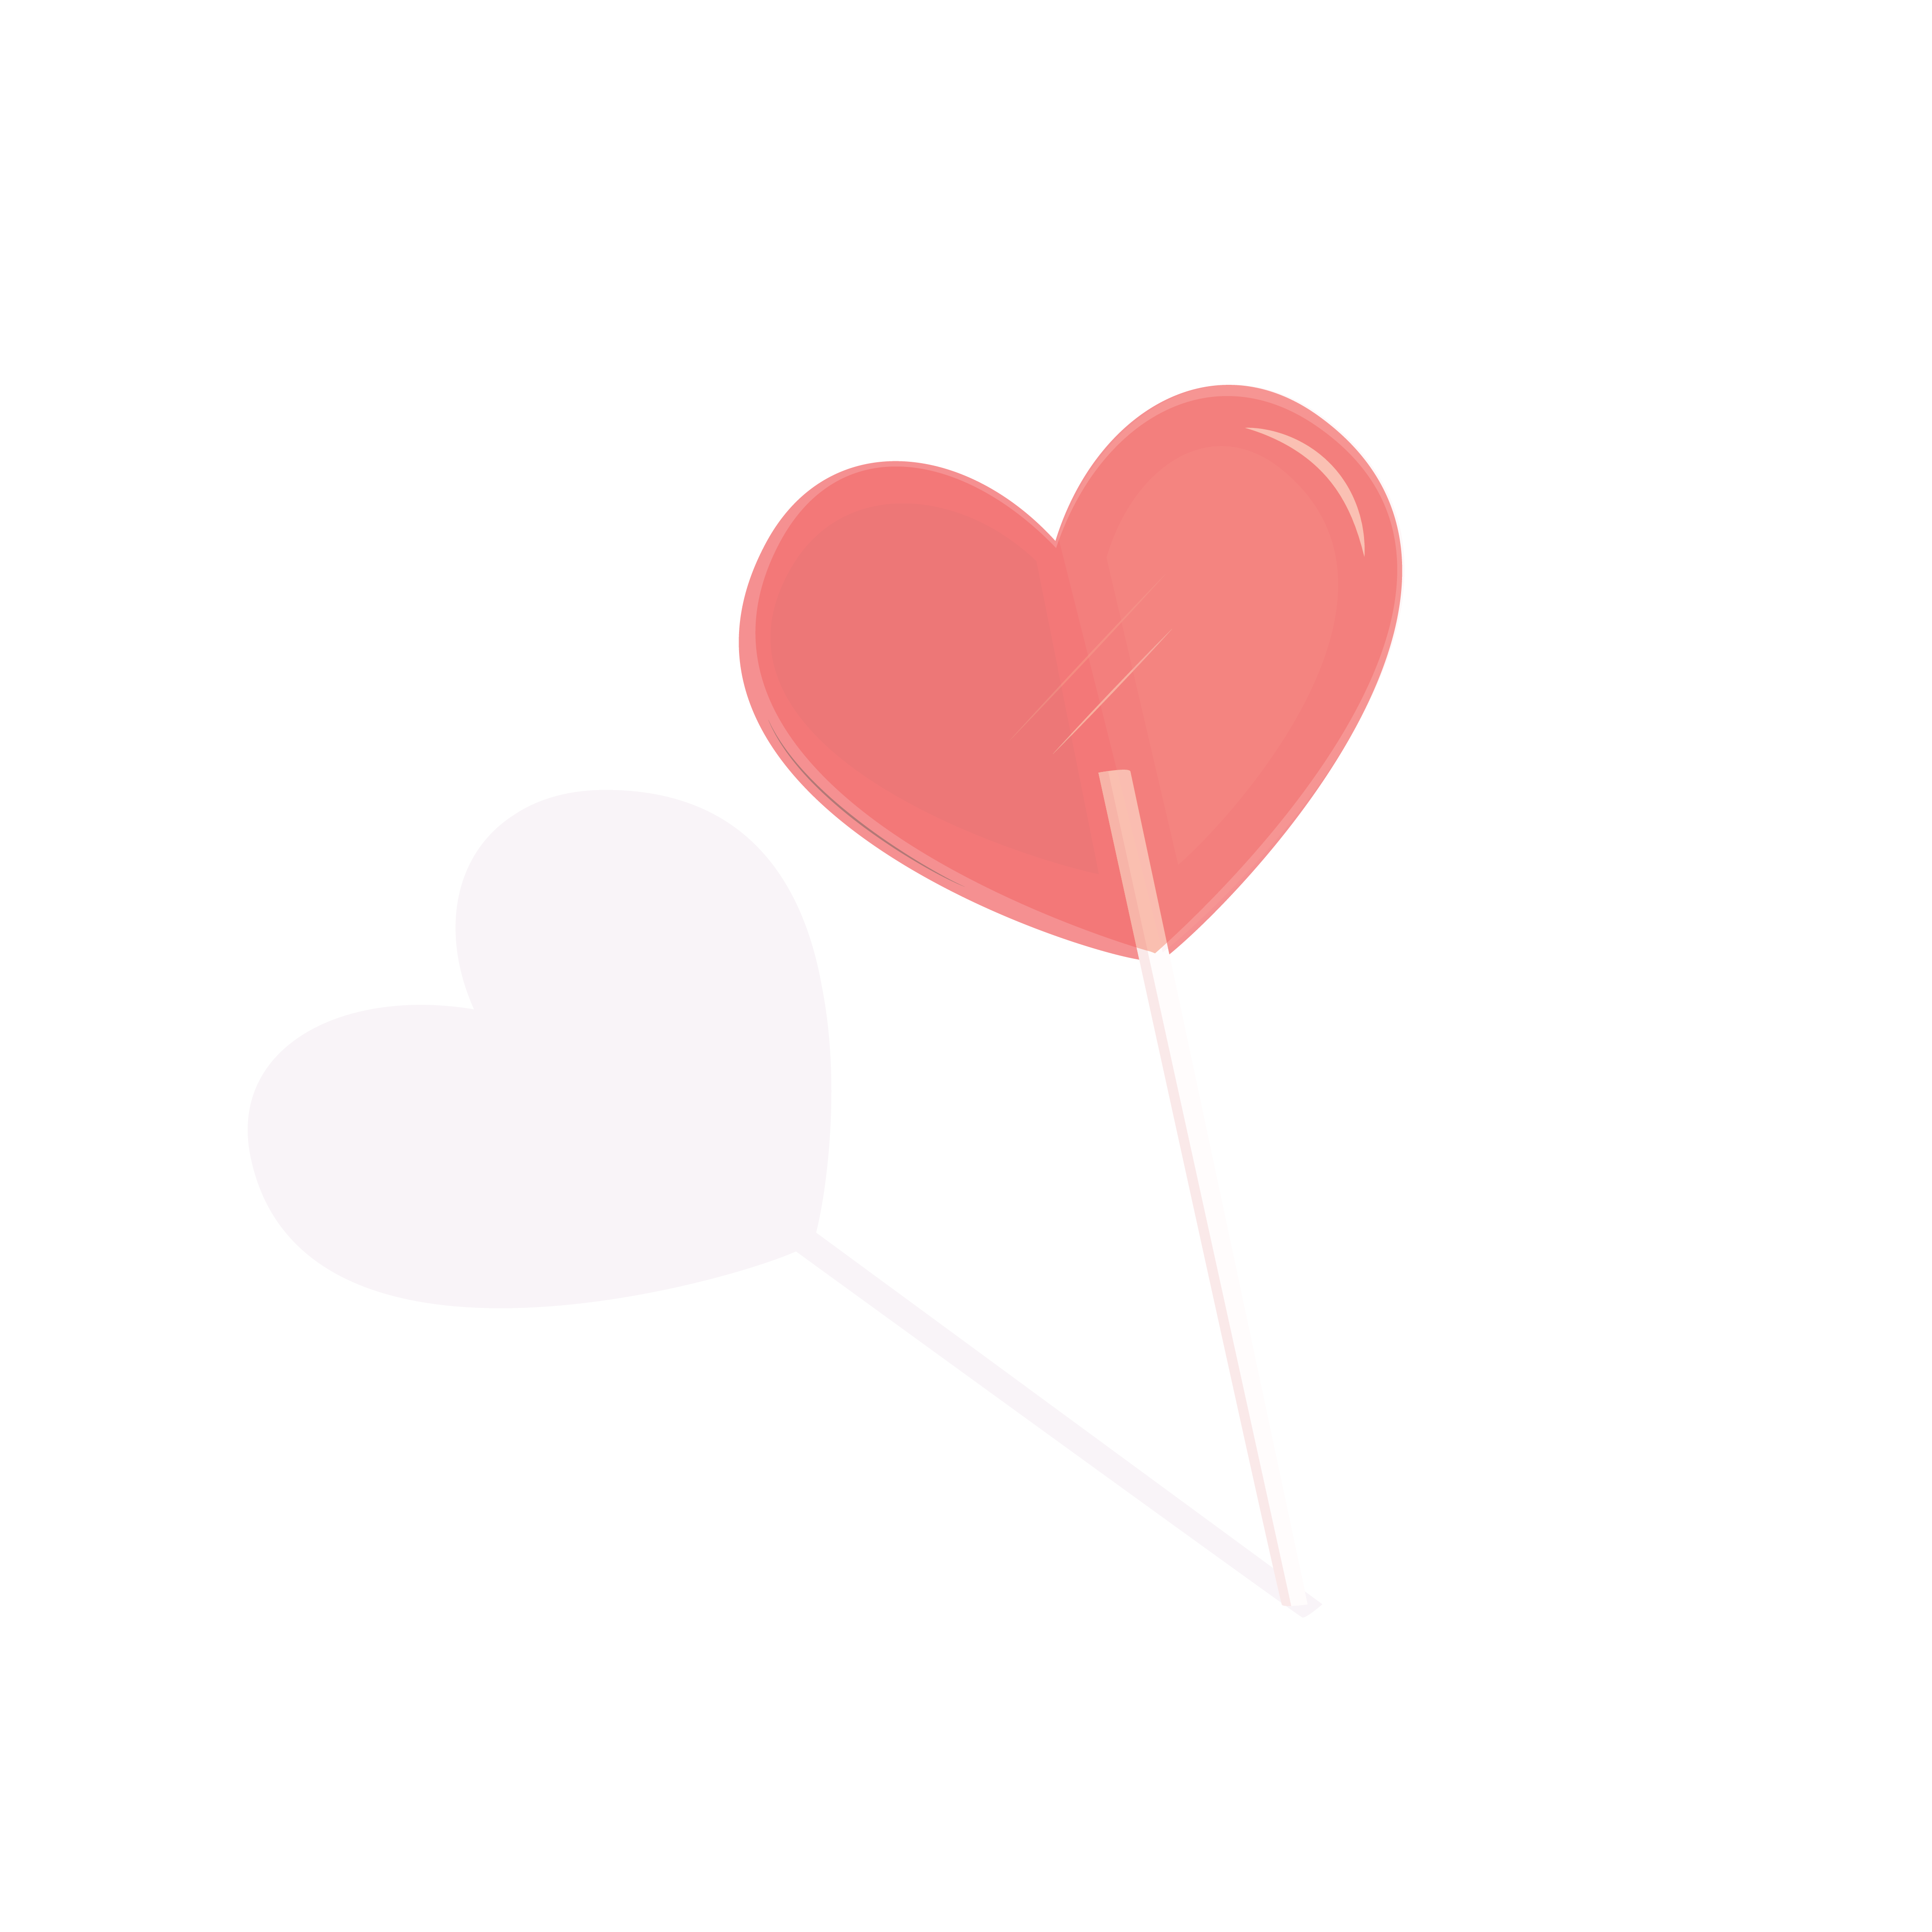 Heart lollipop illustration 